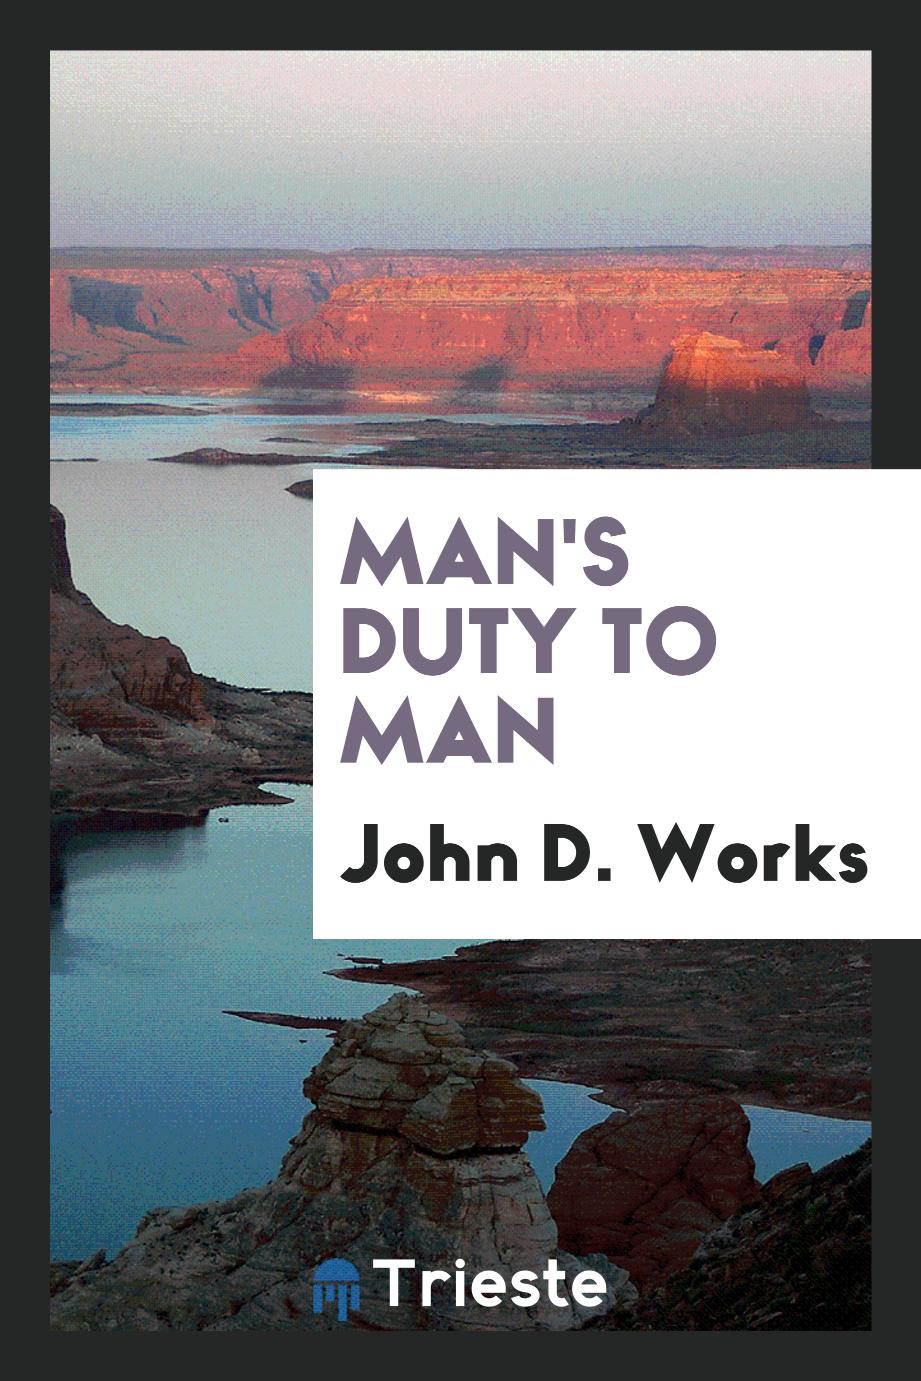 Man's duty to man